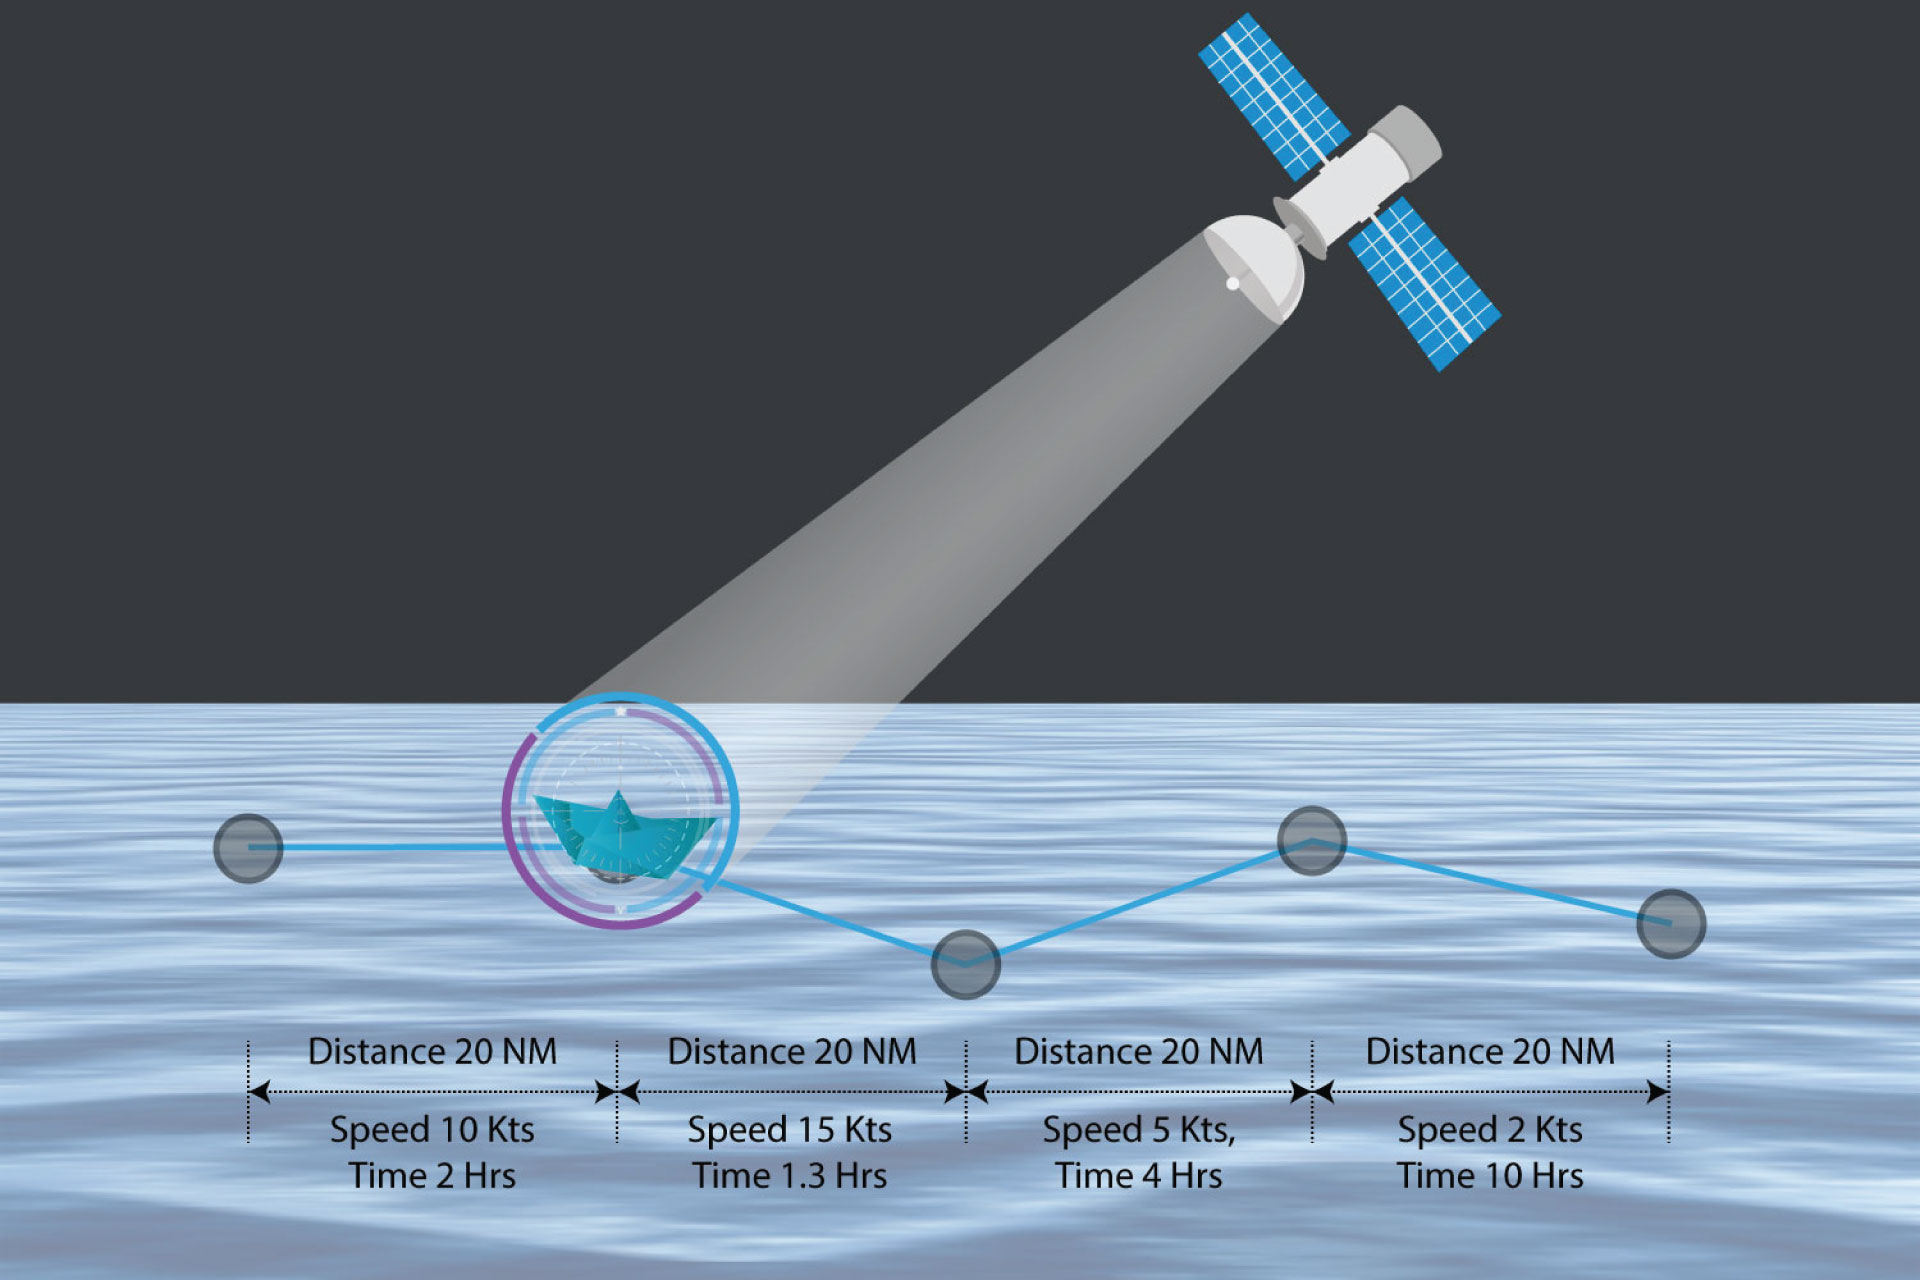 Distance-Based Vessel Tracking